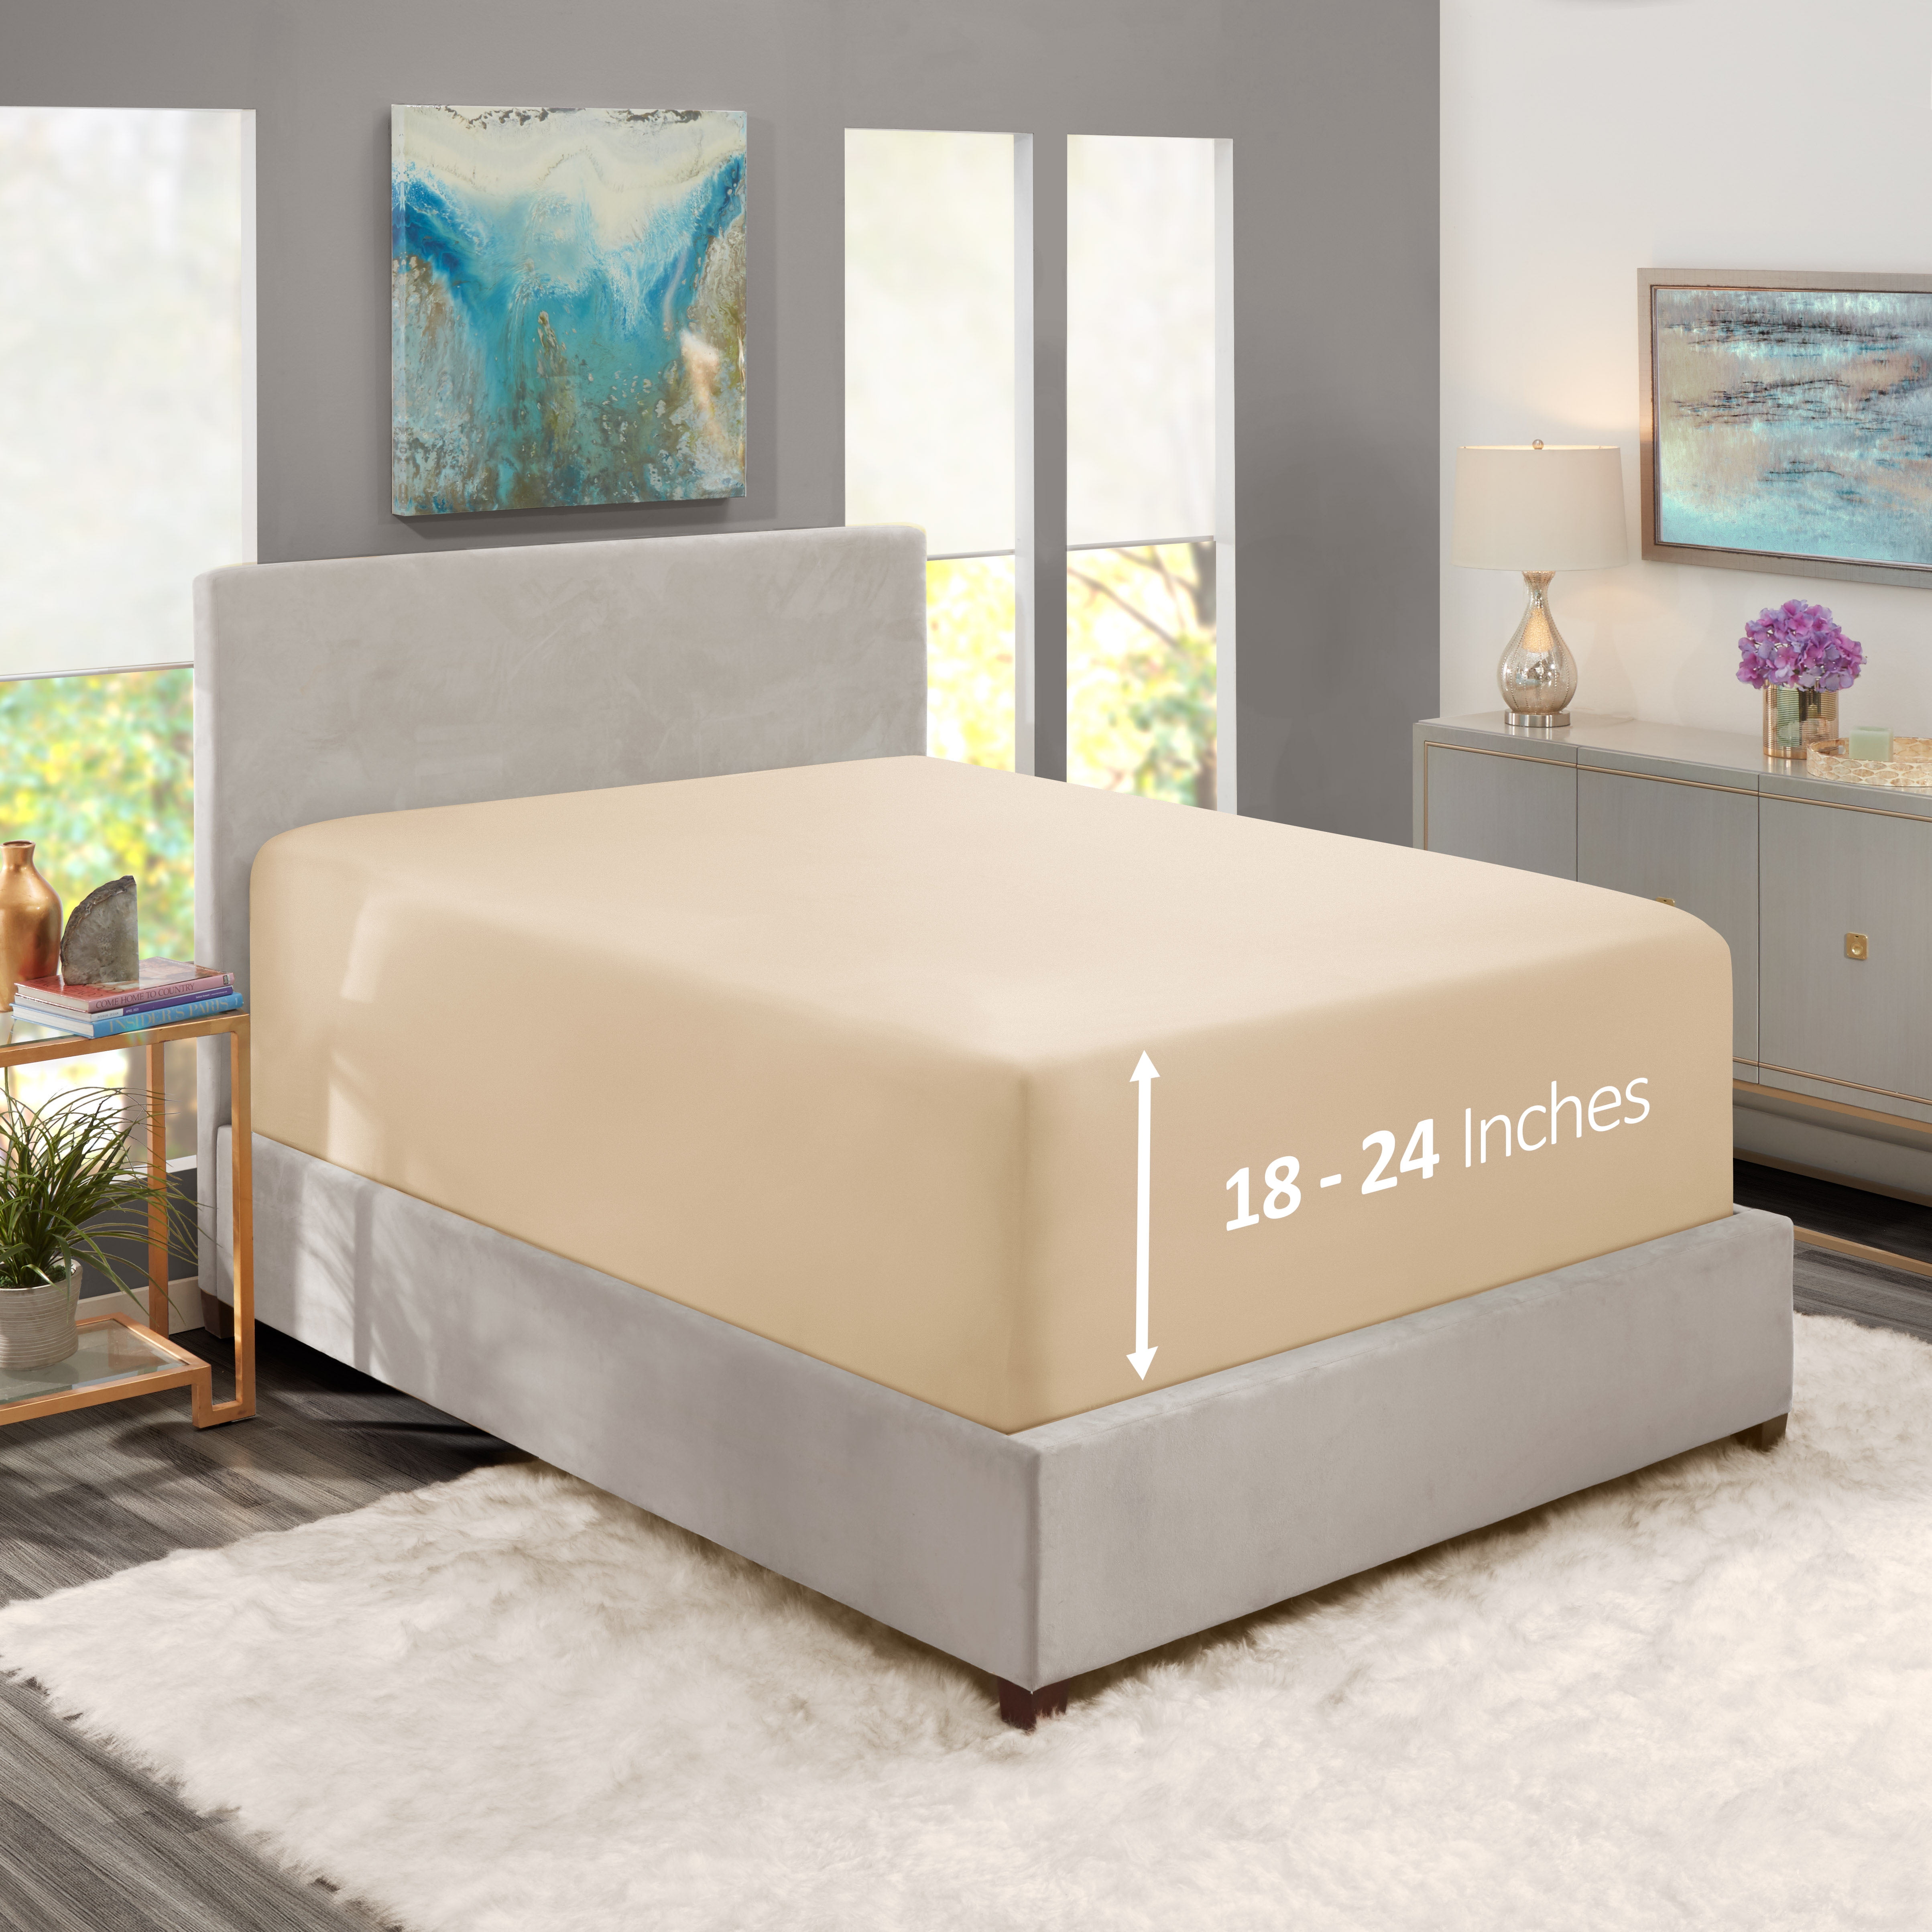 KARRISM Full Size 6 Piece Bed Sheets Set Extra Soft & Breathable Brushed 1800 Series Microfiber Comfortable 16-Inch Deep Pocket Bedding Set,Coral Wrinkle & Fade Resistant Cooling